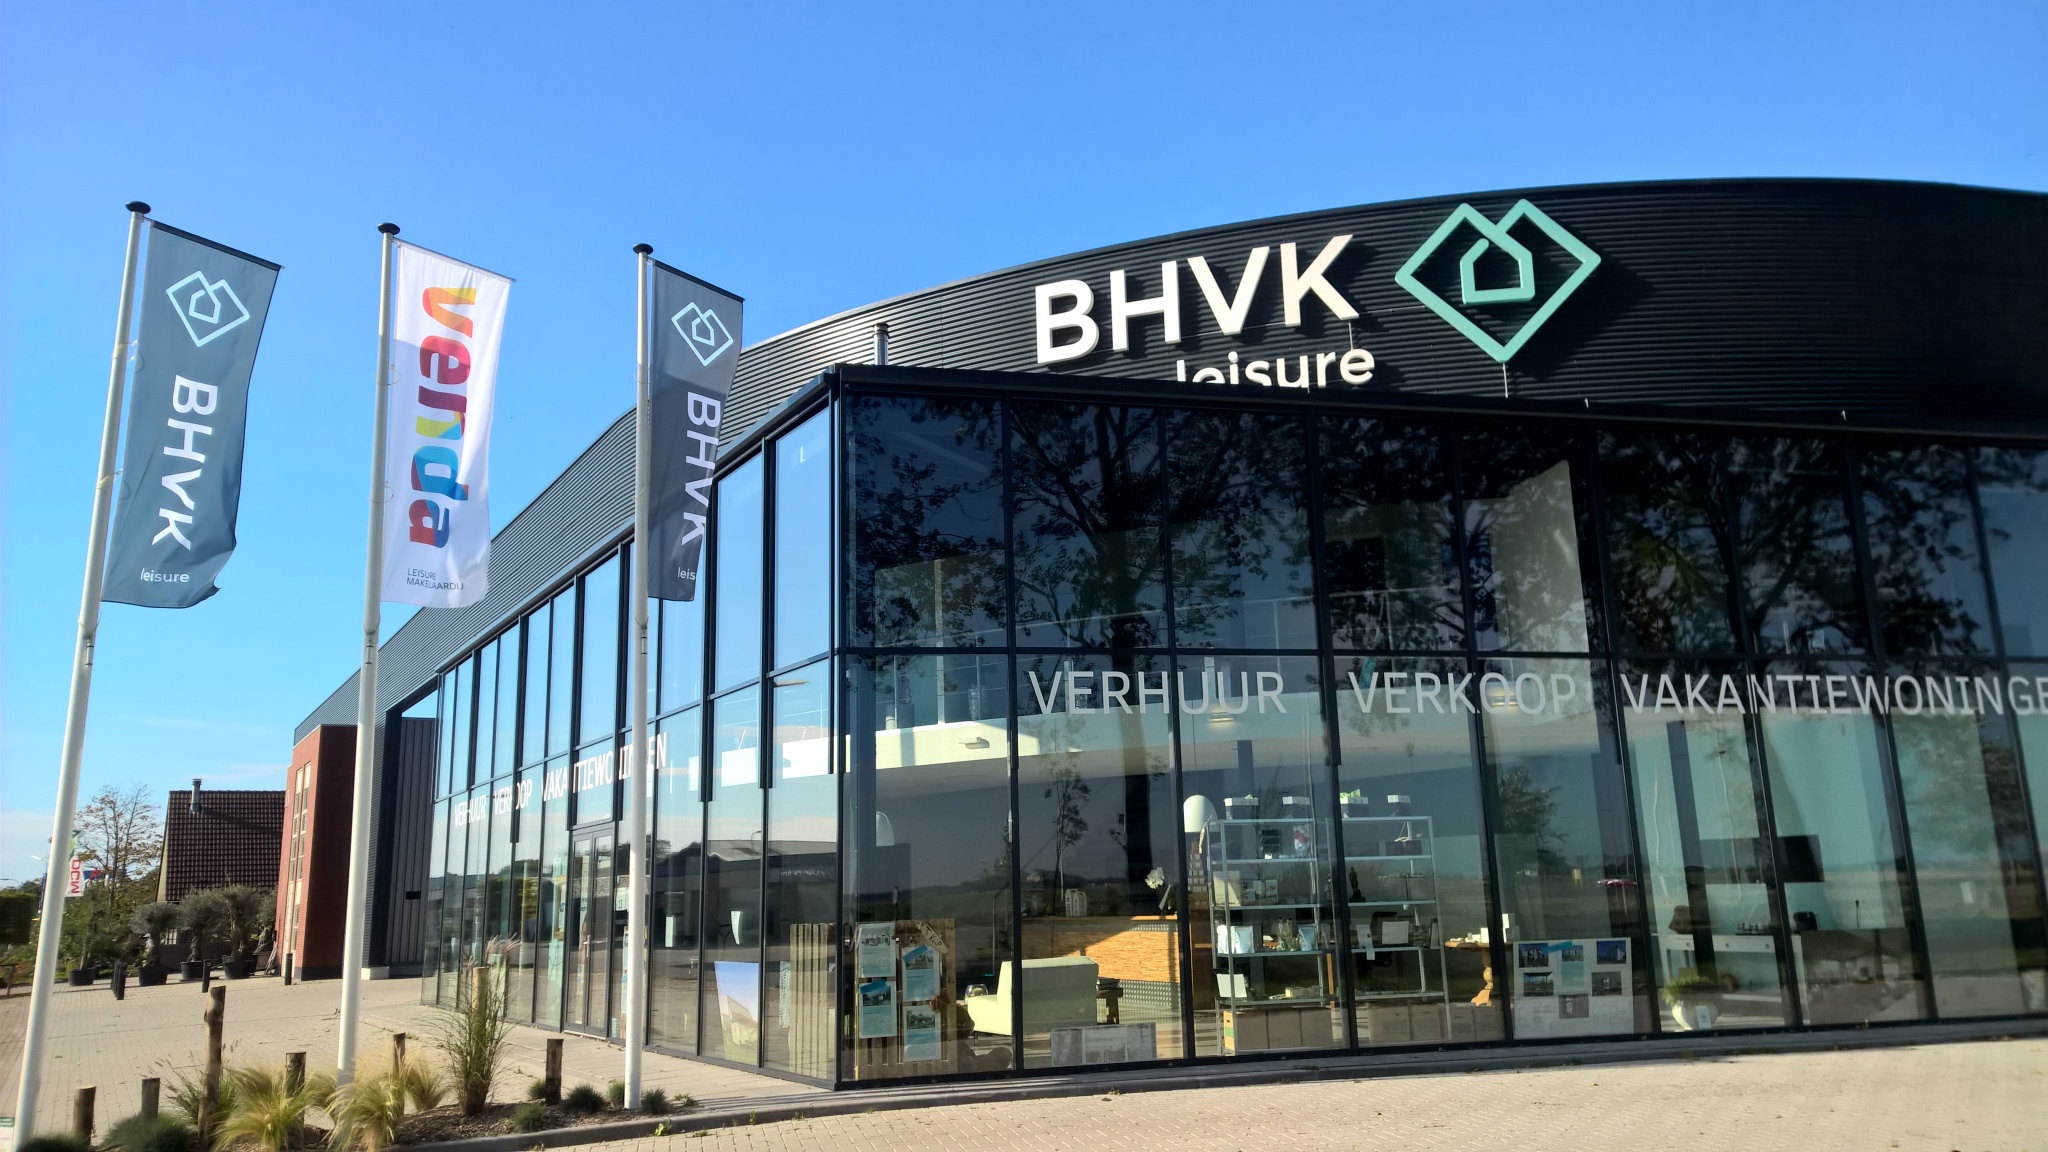 BHVK Leisure | Discover Benelux